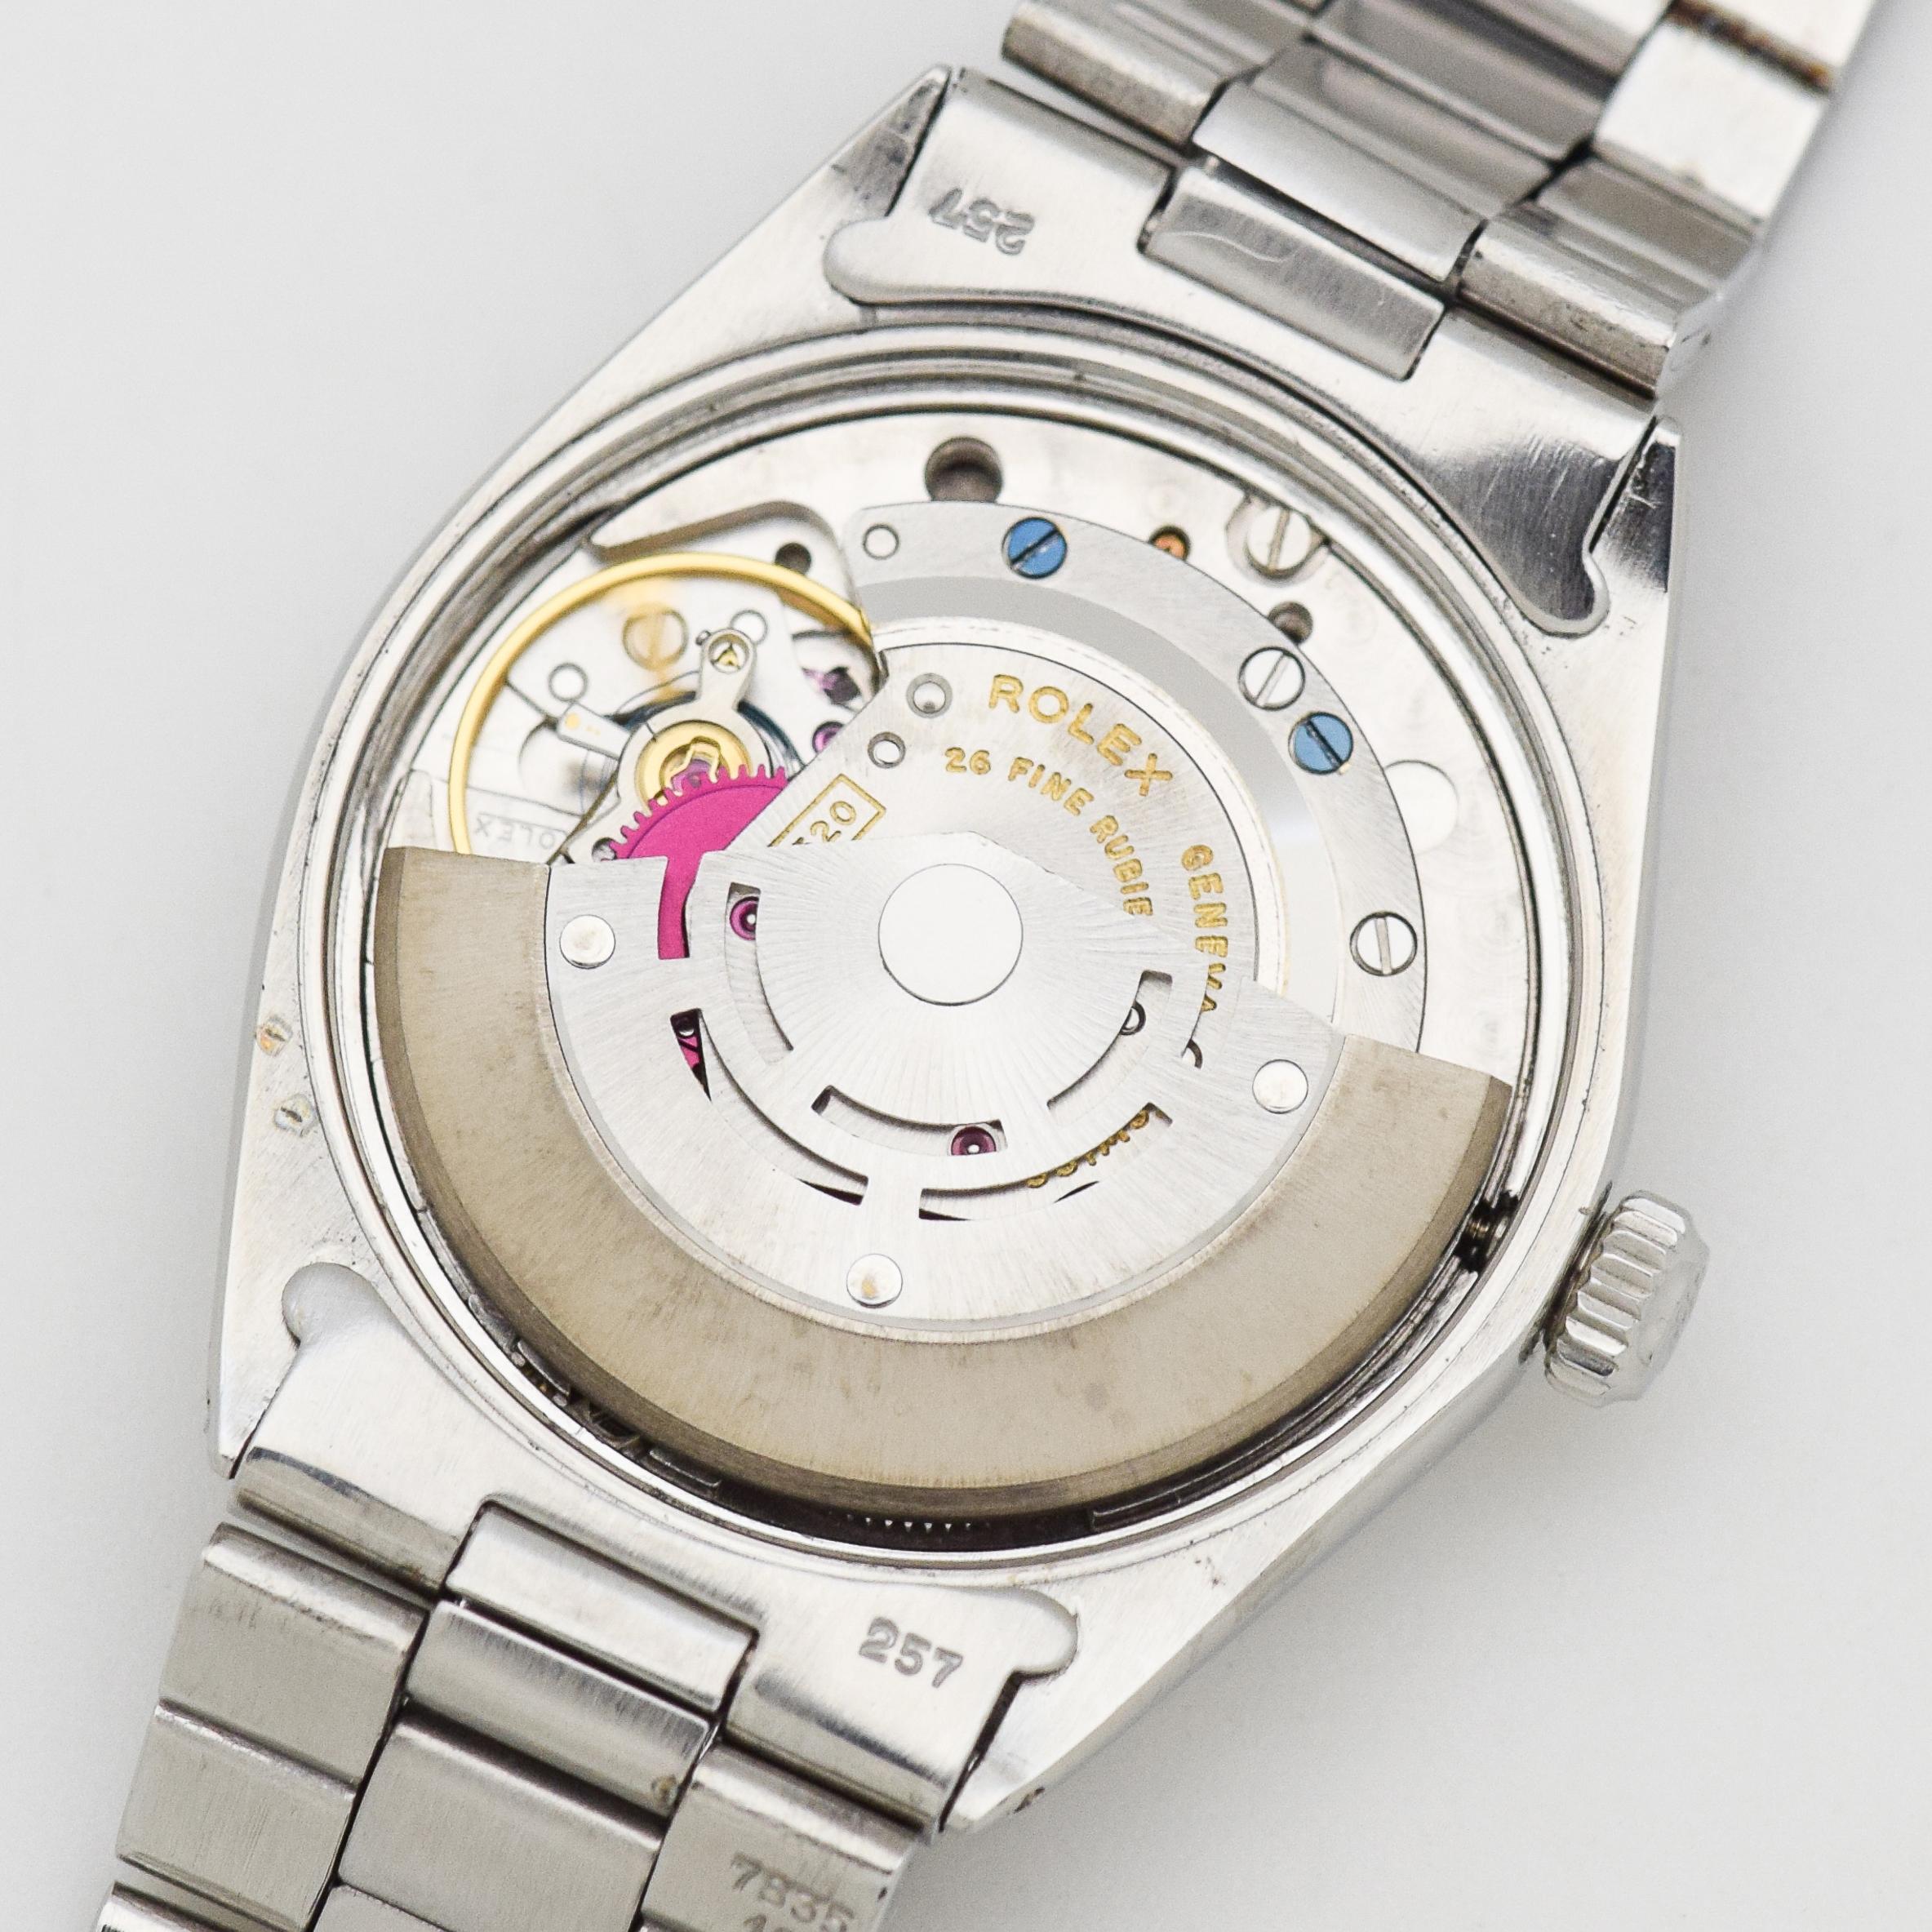 Vintage Rolex Air-King Ref. 5500/1002 Stainless Steel Watch, 1970 5